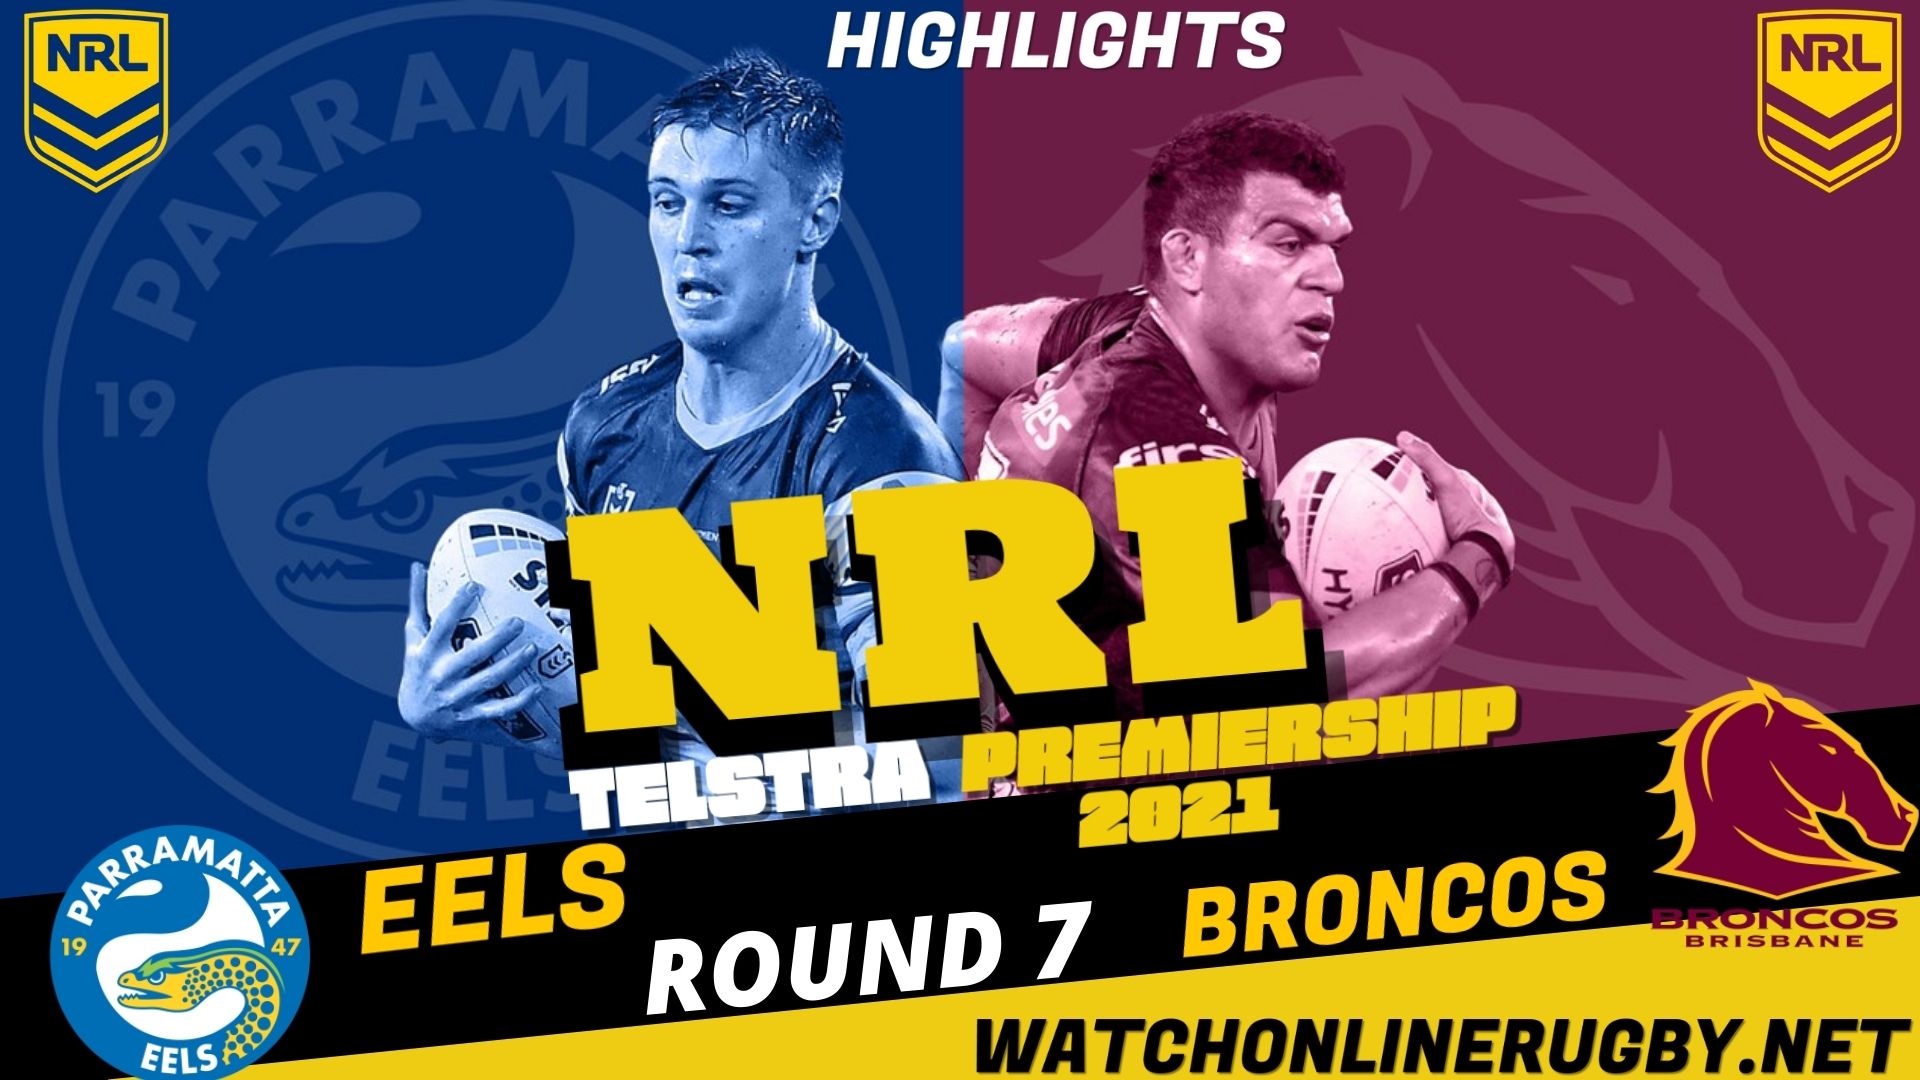 Eels Vs Broncos Highlights RD 7 NRL Rugby